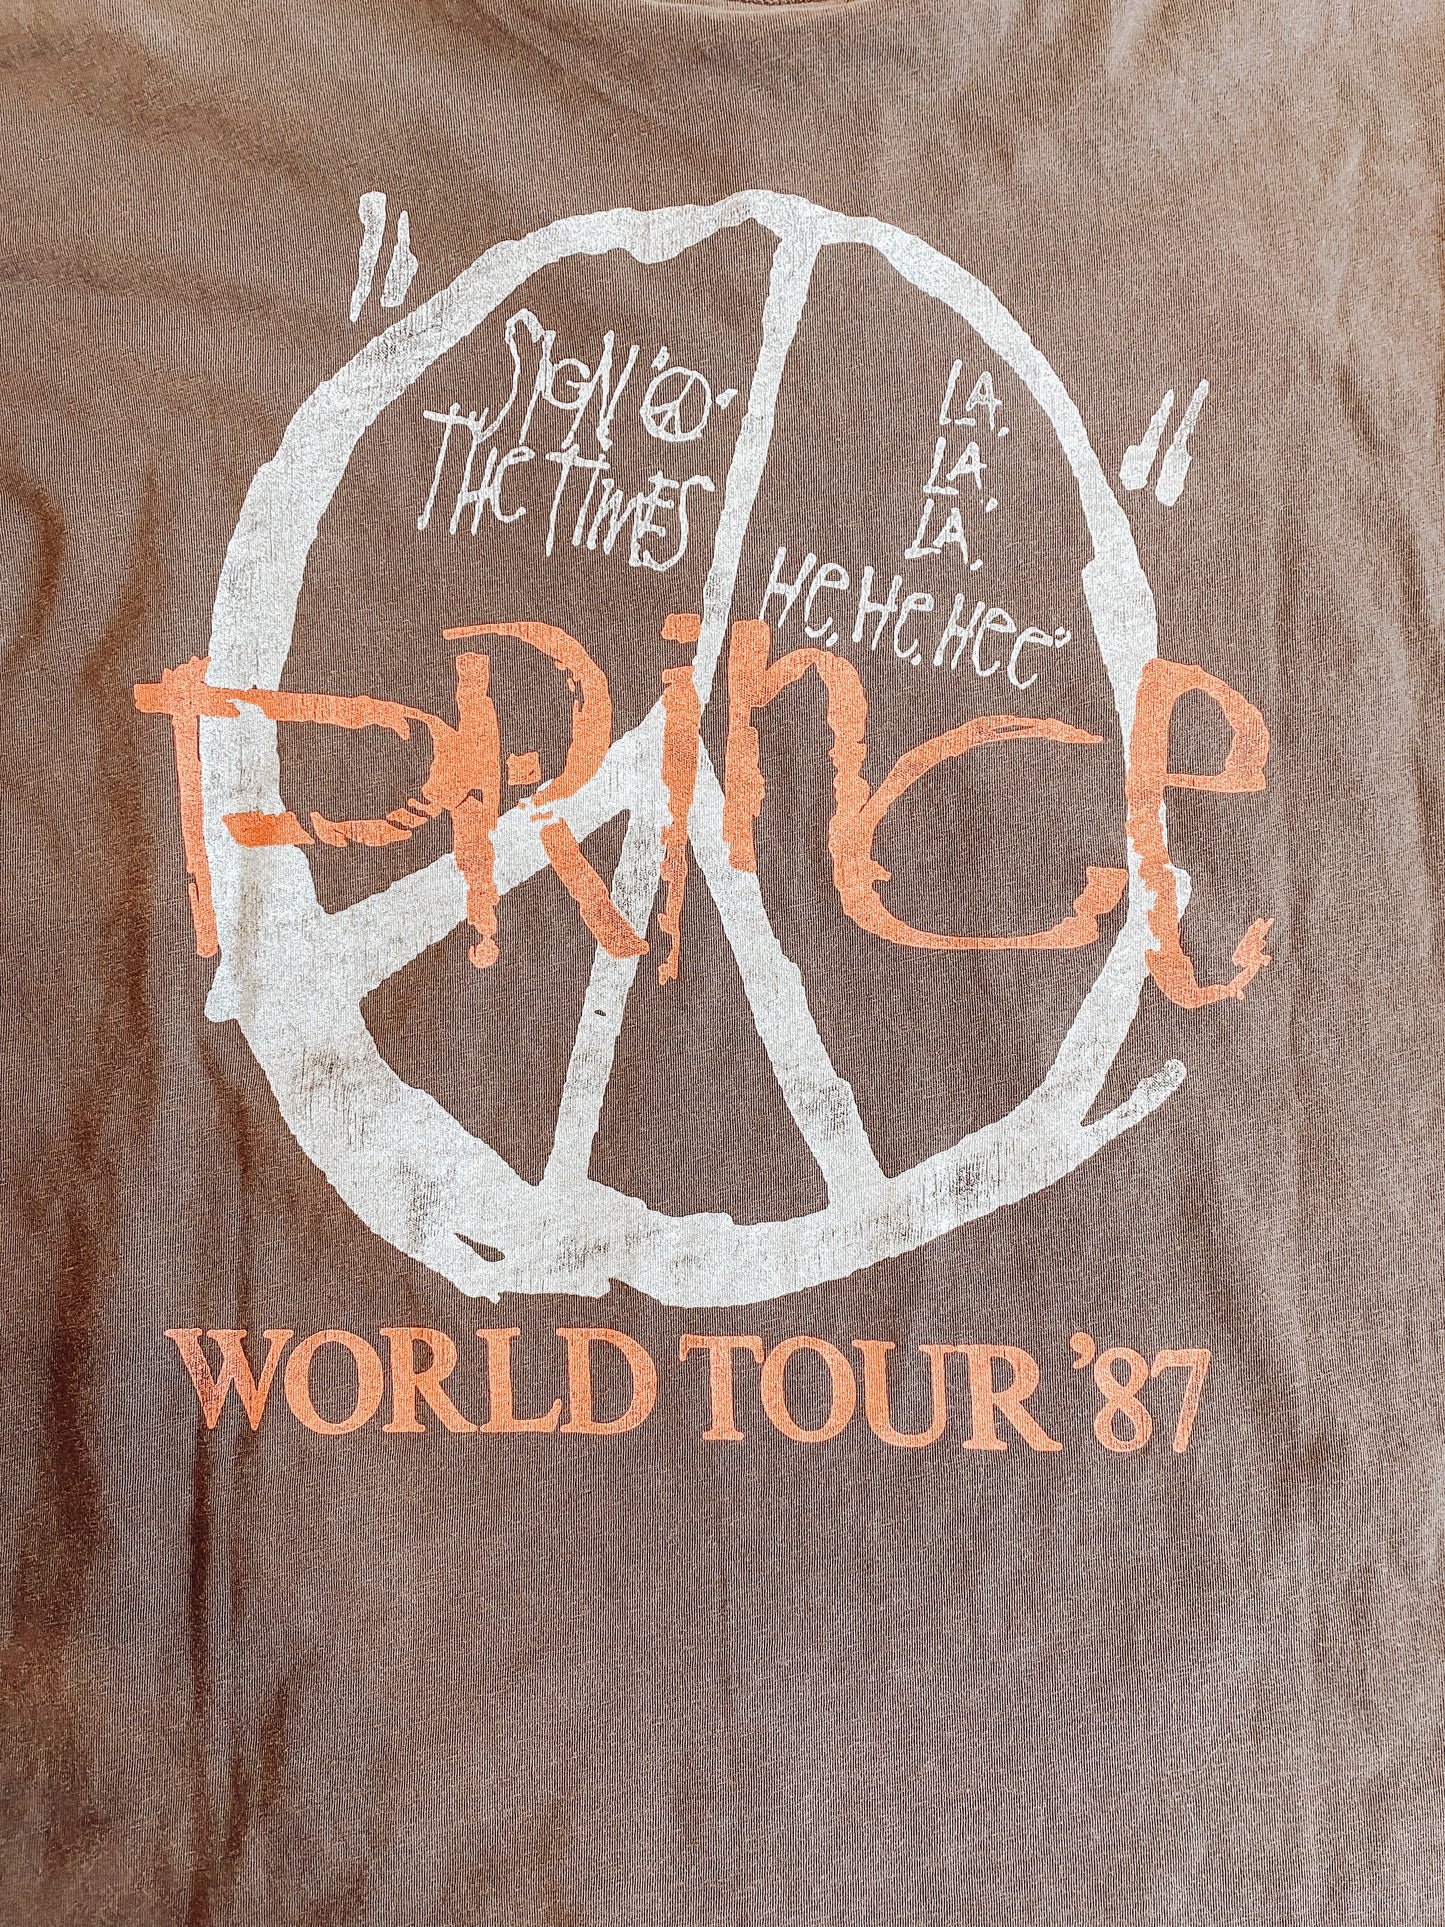 Prince world tour 1987 merch tee